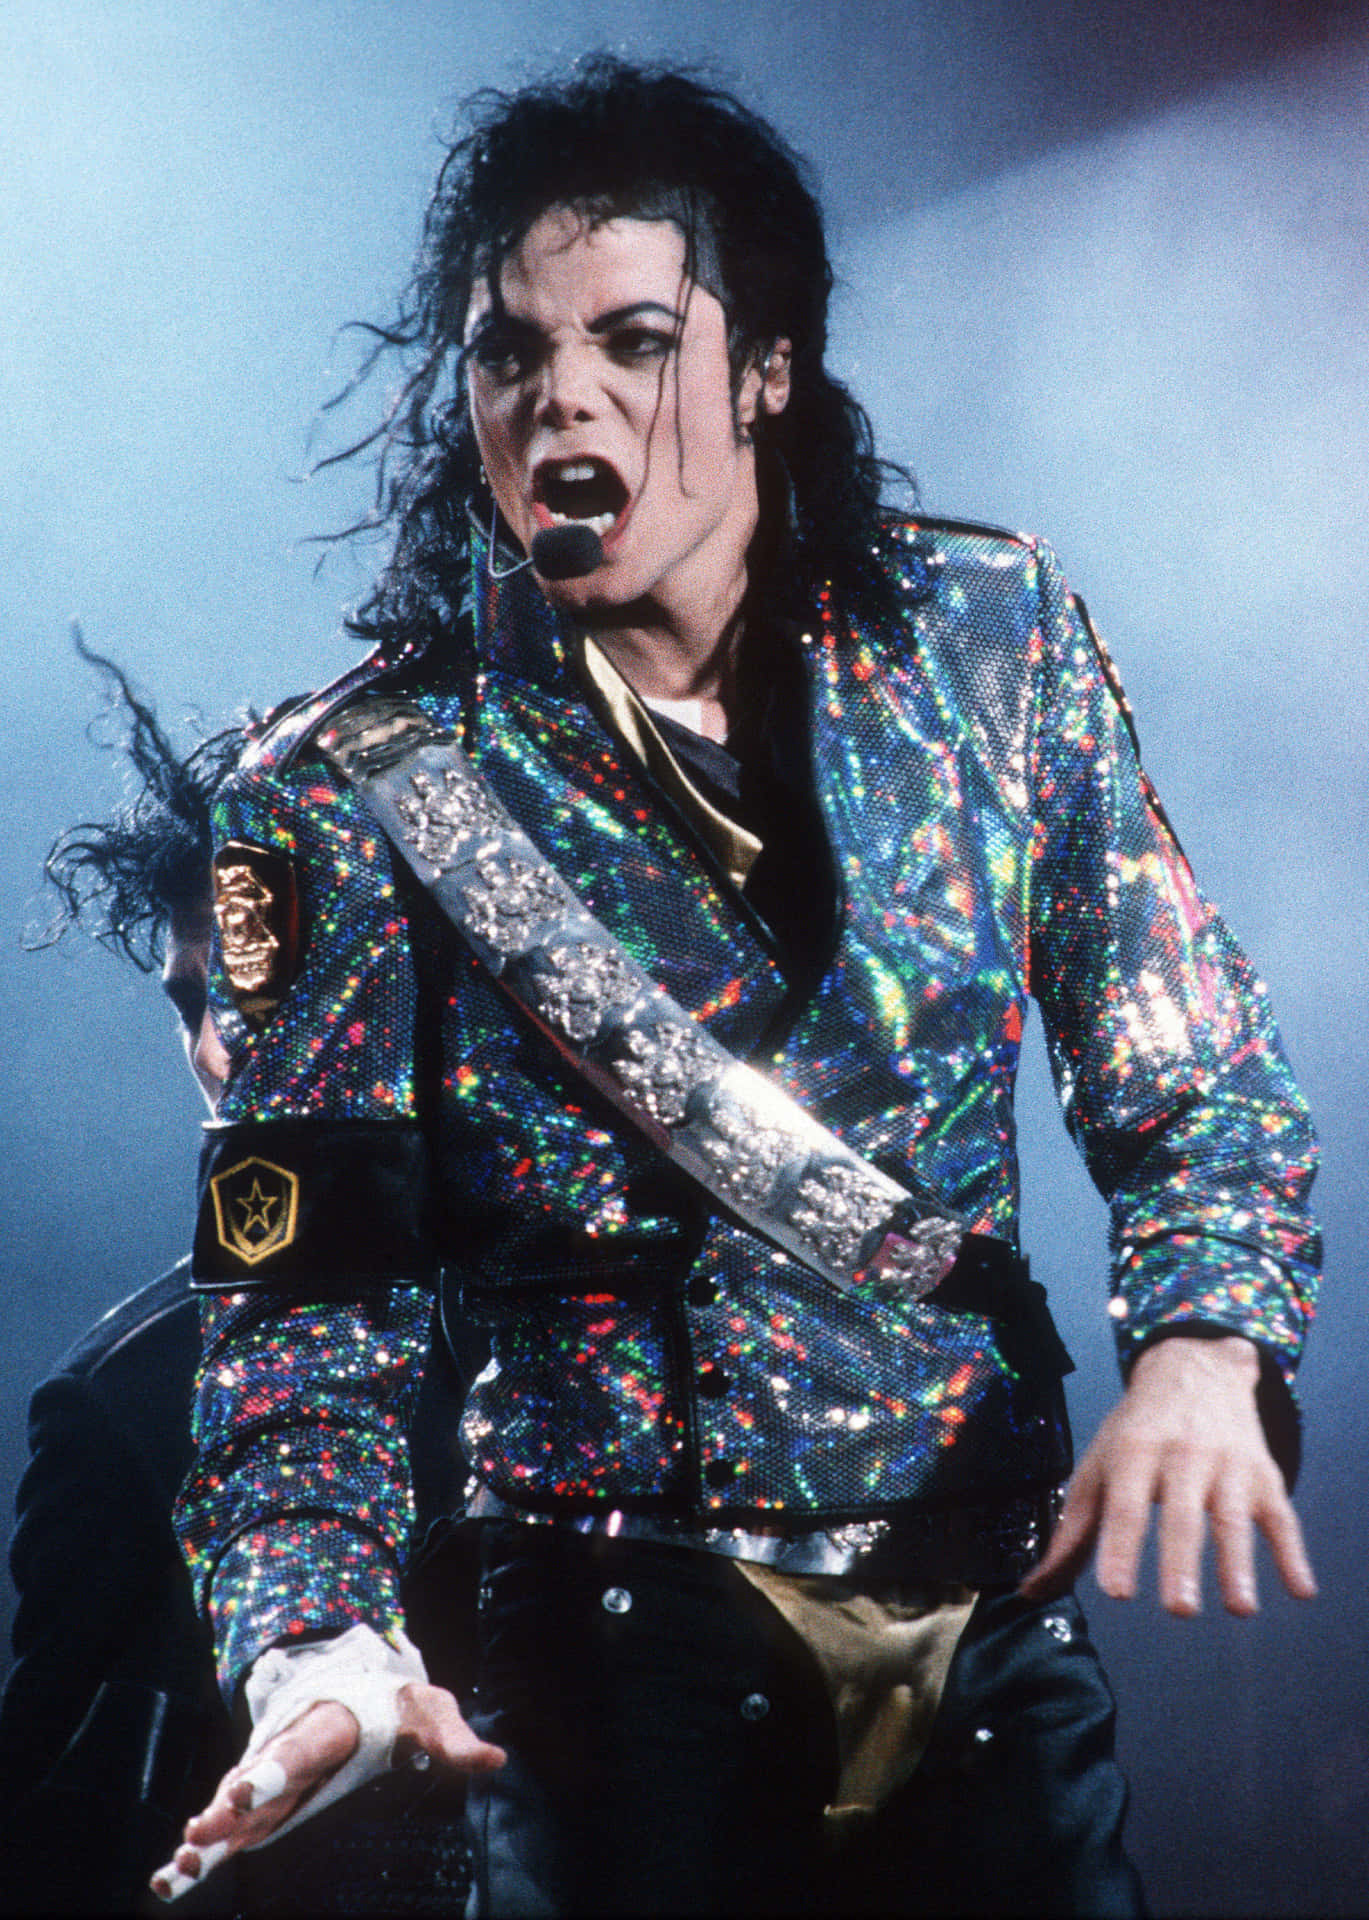 Imagensdo Michael Jackson.